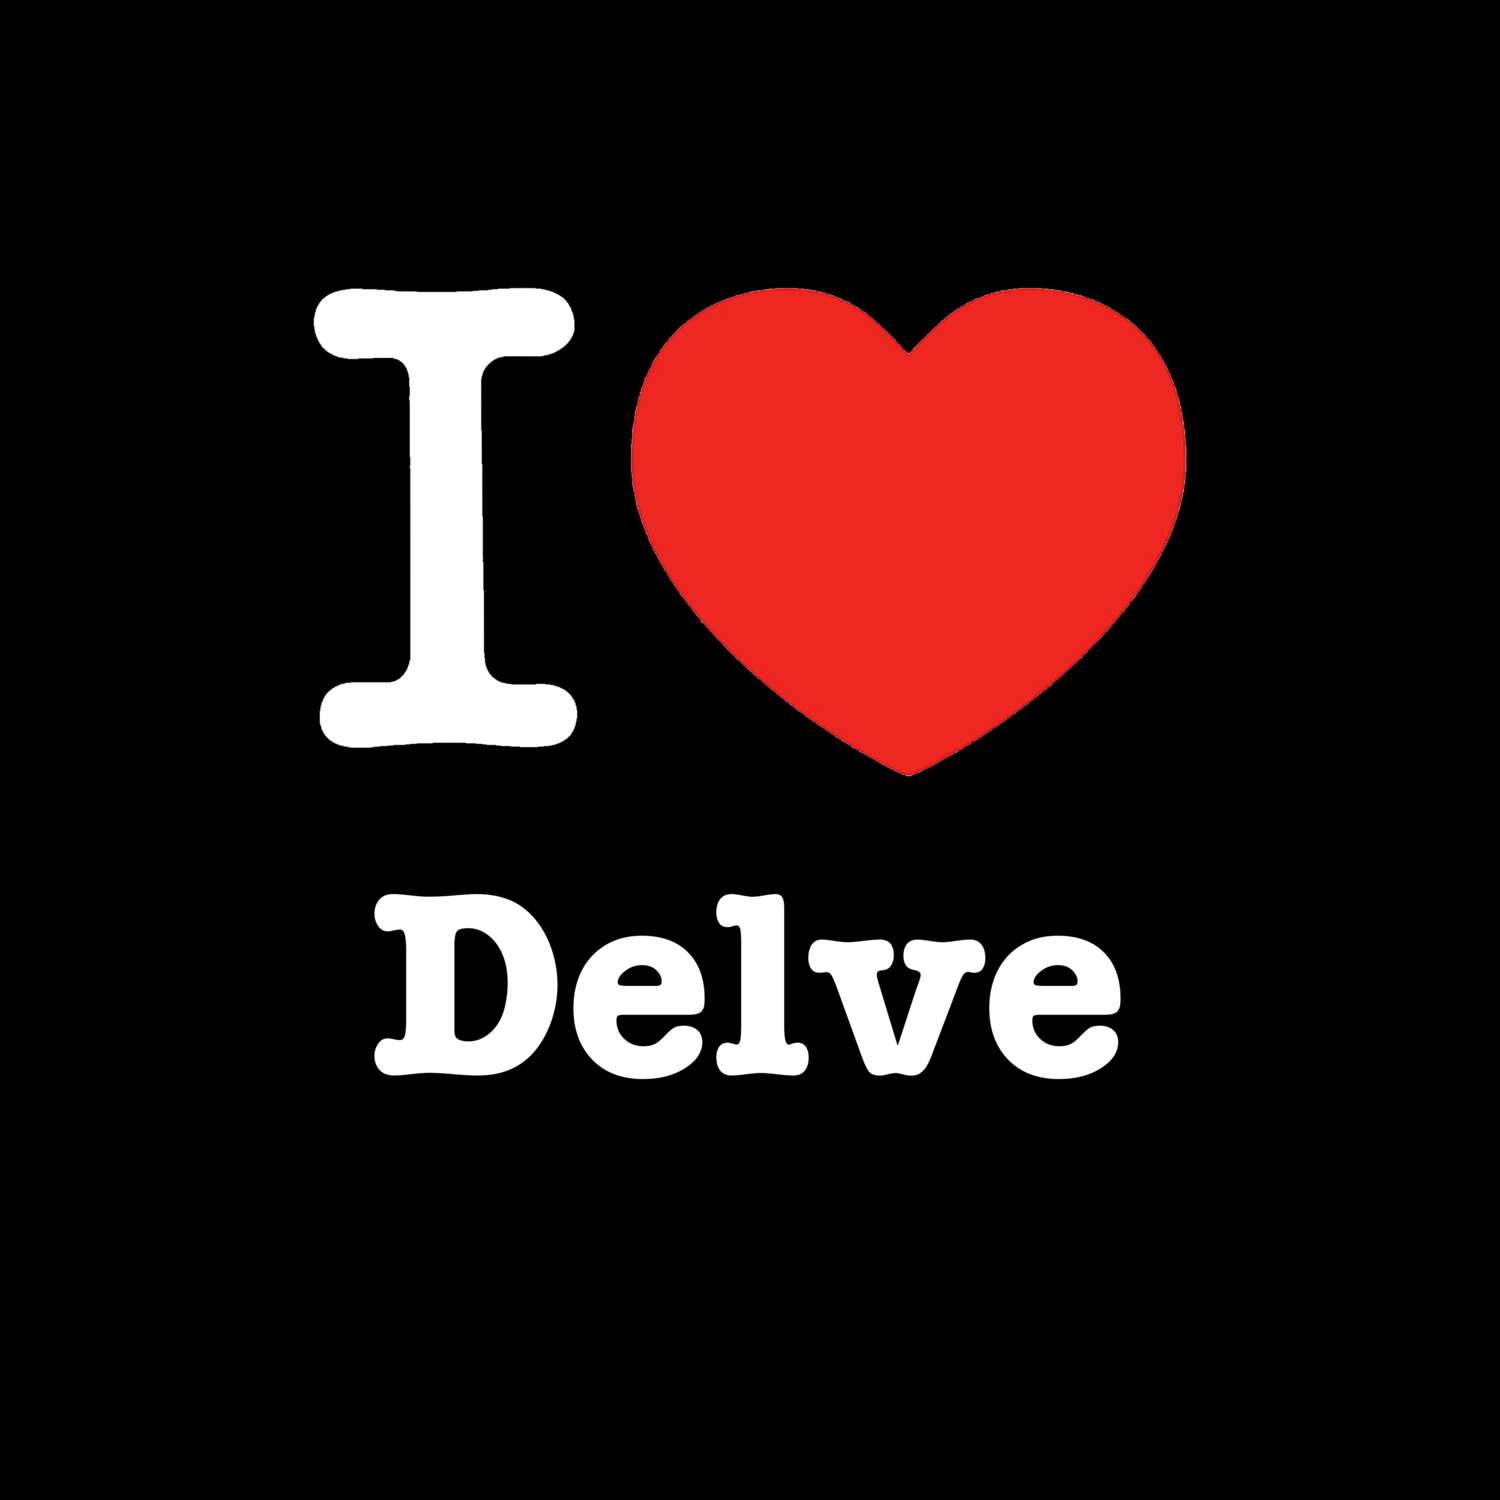 Delve T-Shirt »I love«